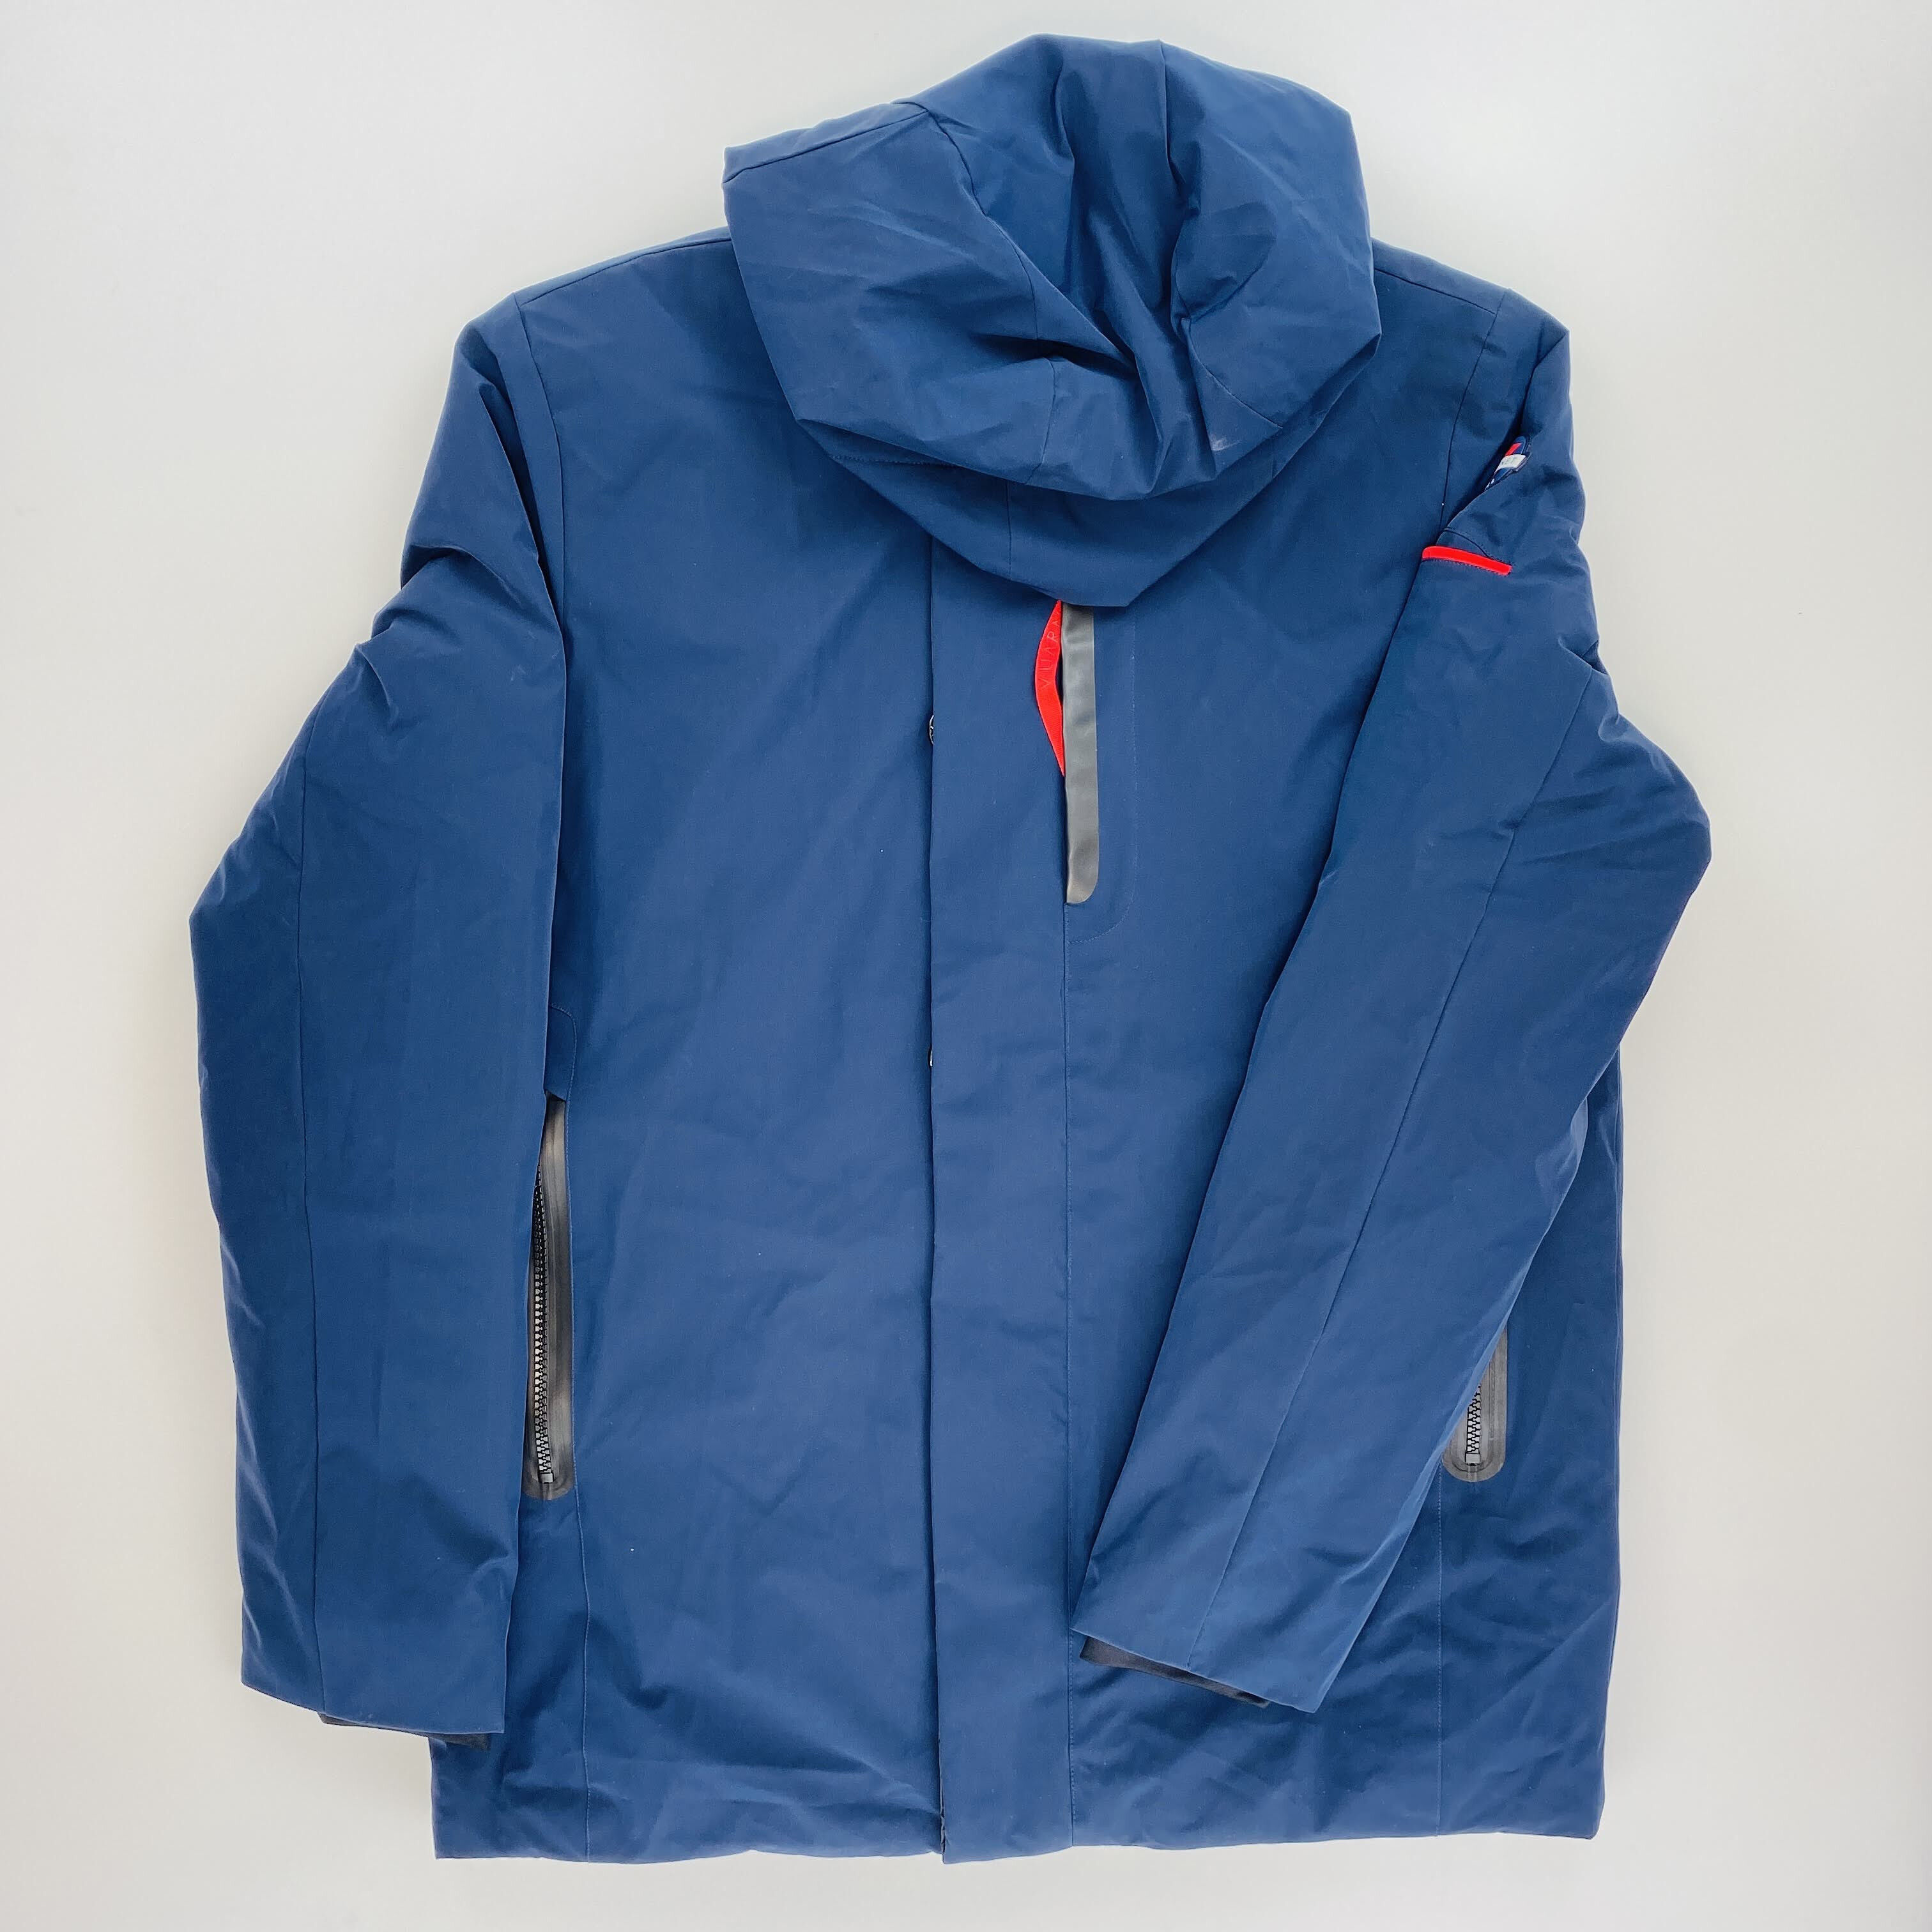 Vuarnet Orta Jacket - Segunda Mano Chaqueta - Hombre - Aceite azul - L | Hardloop